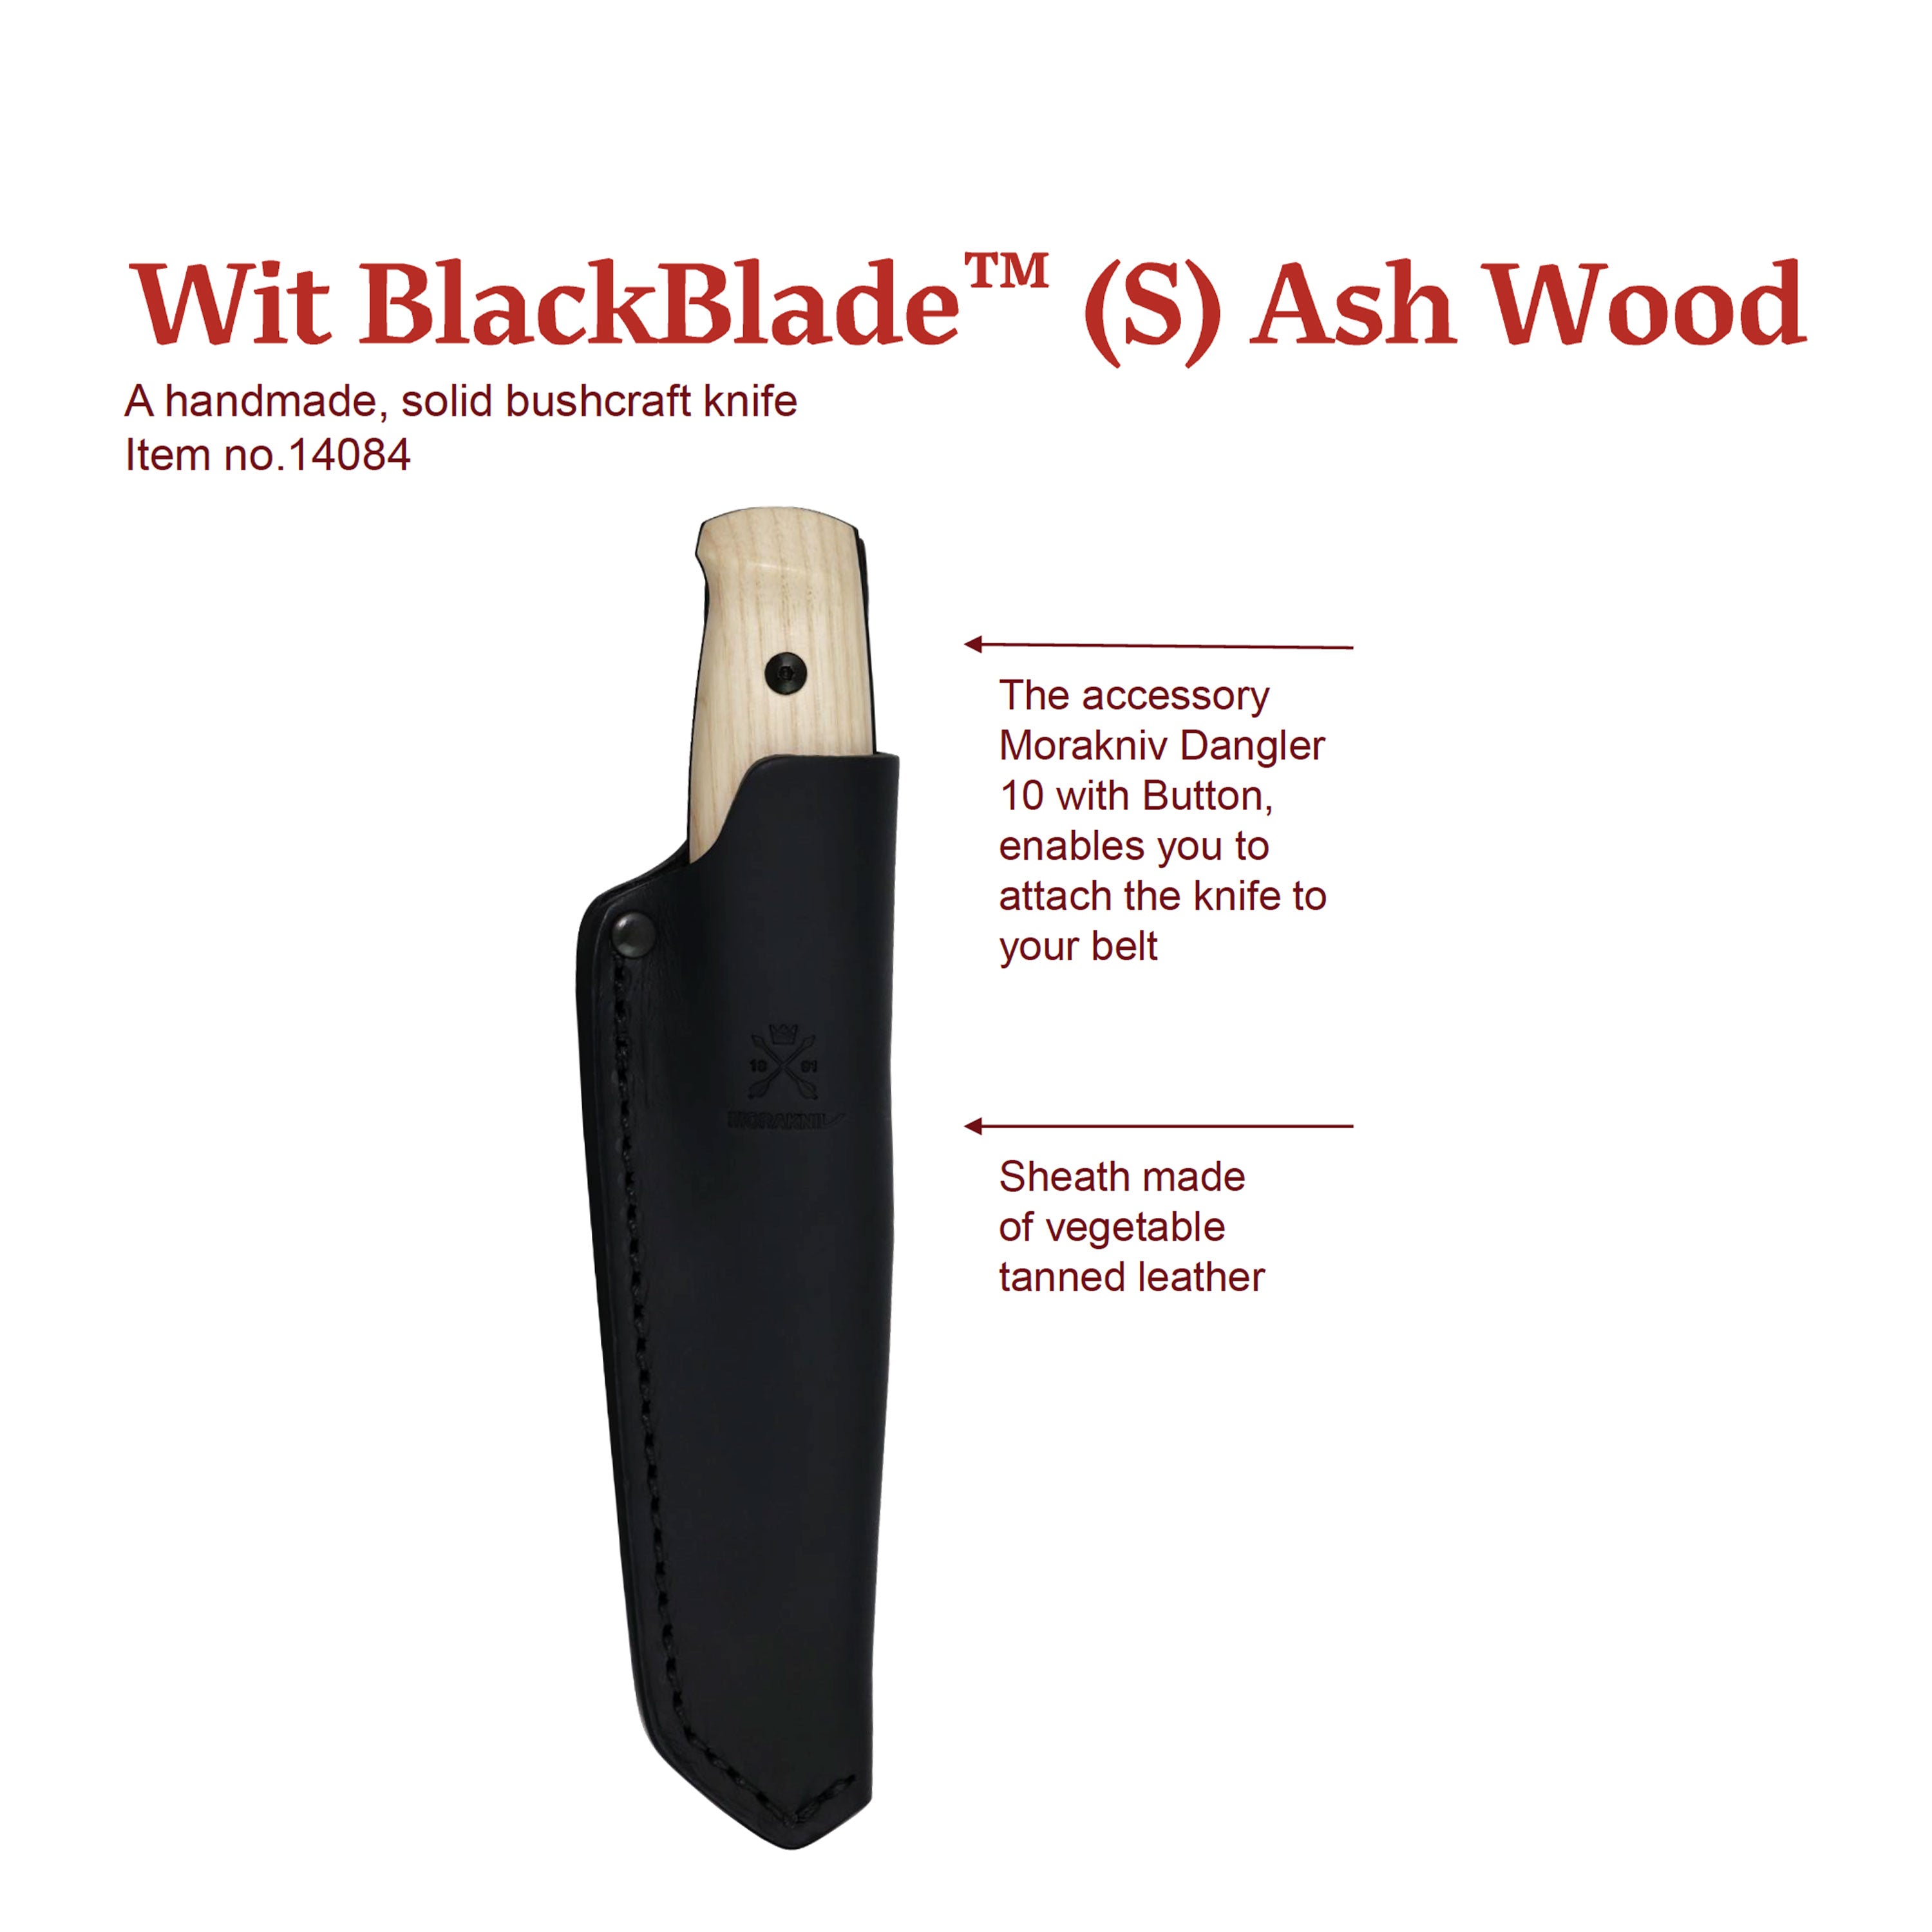 WIT Blackblade (S) Ash Wood